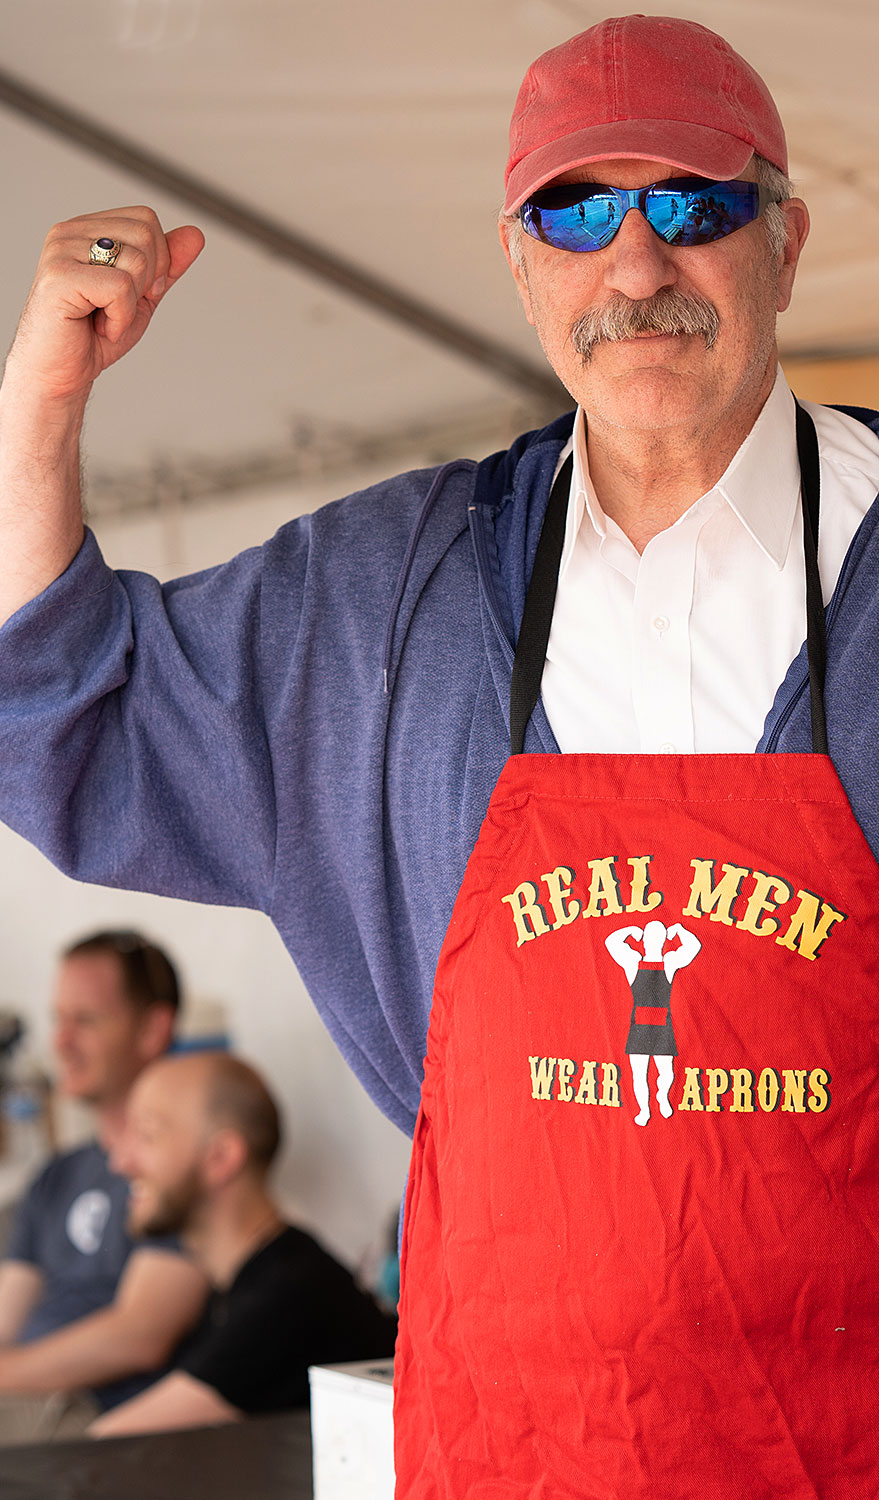 Restaurant owner in apron that displays "Real men wear aprons"